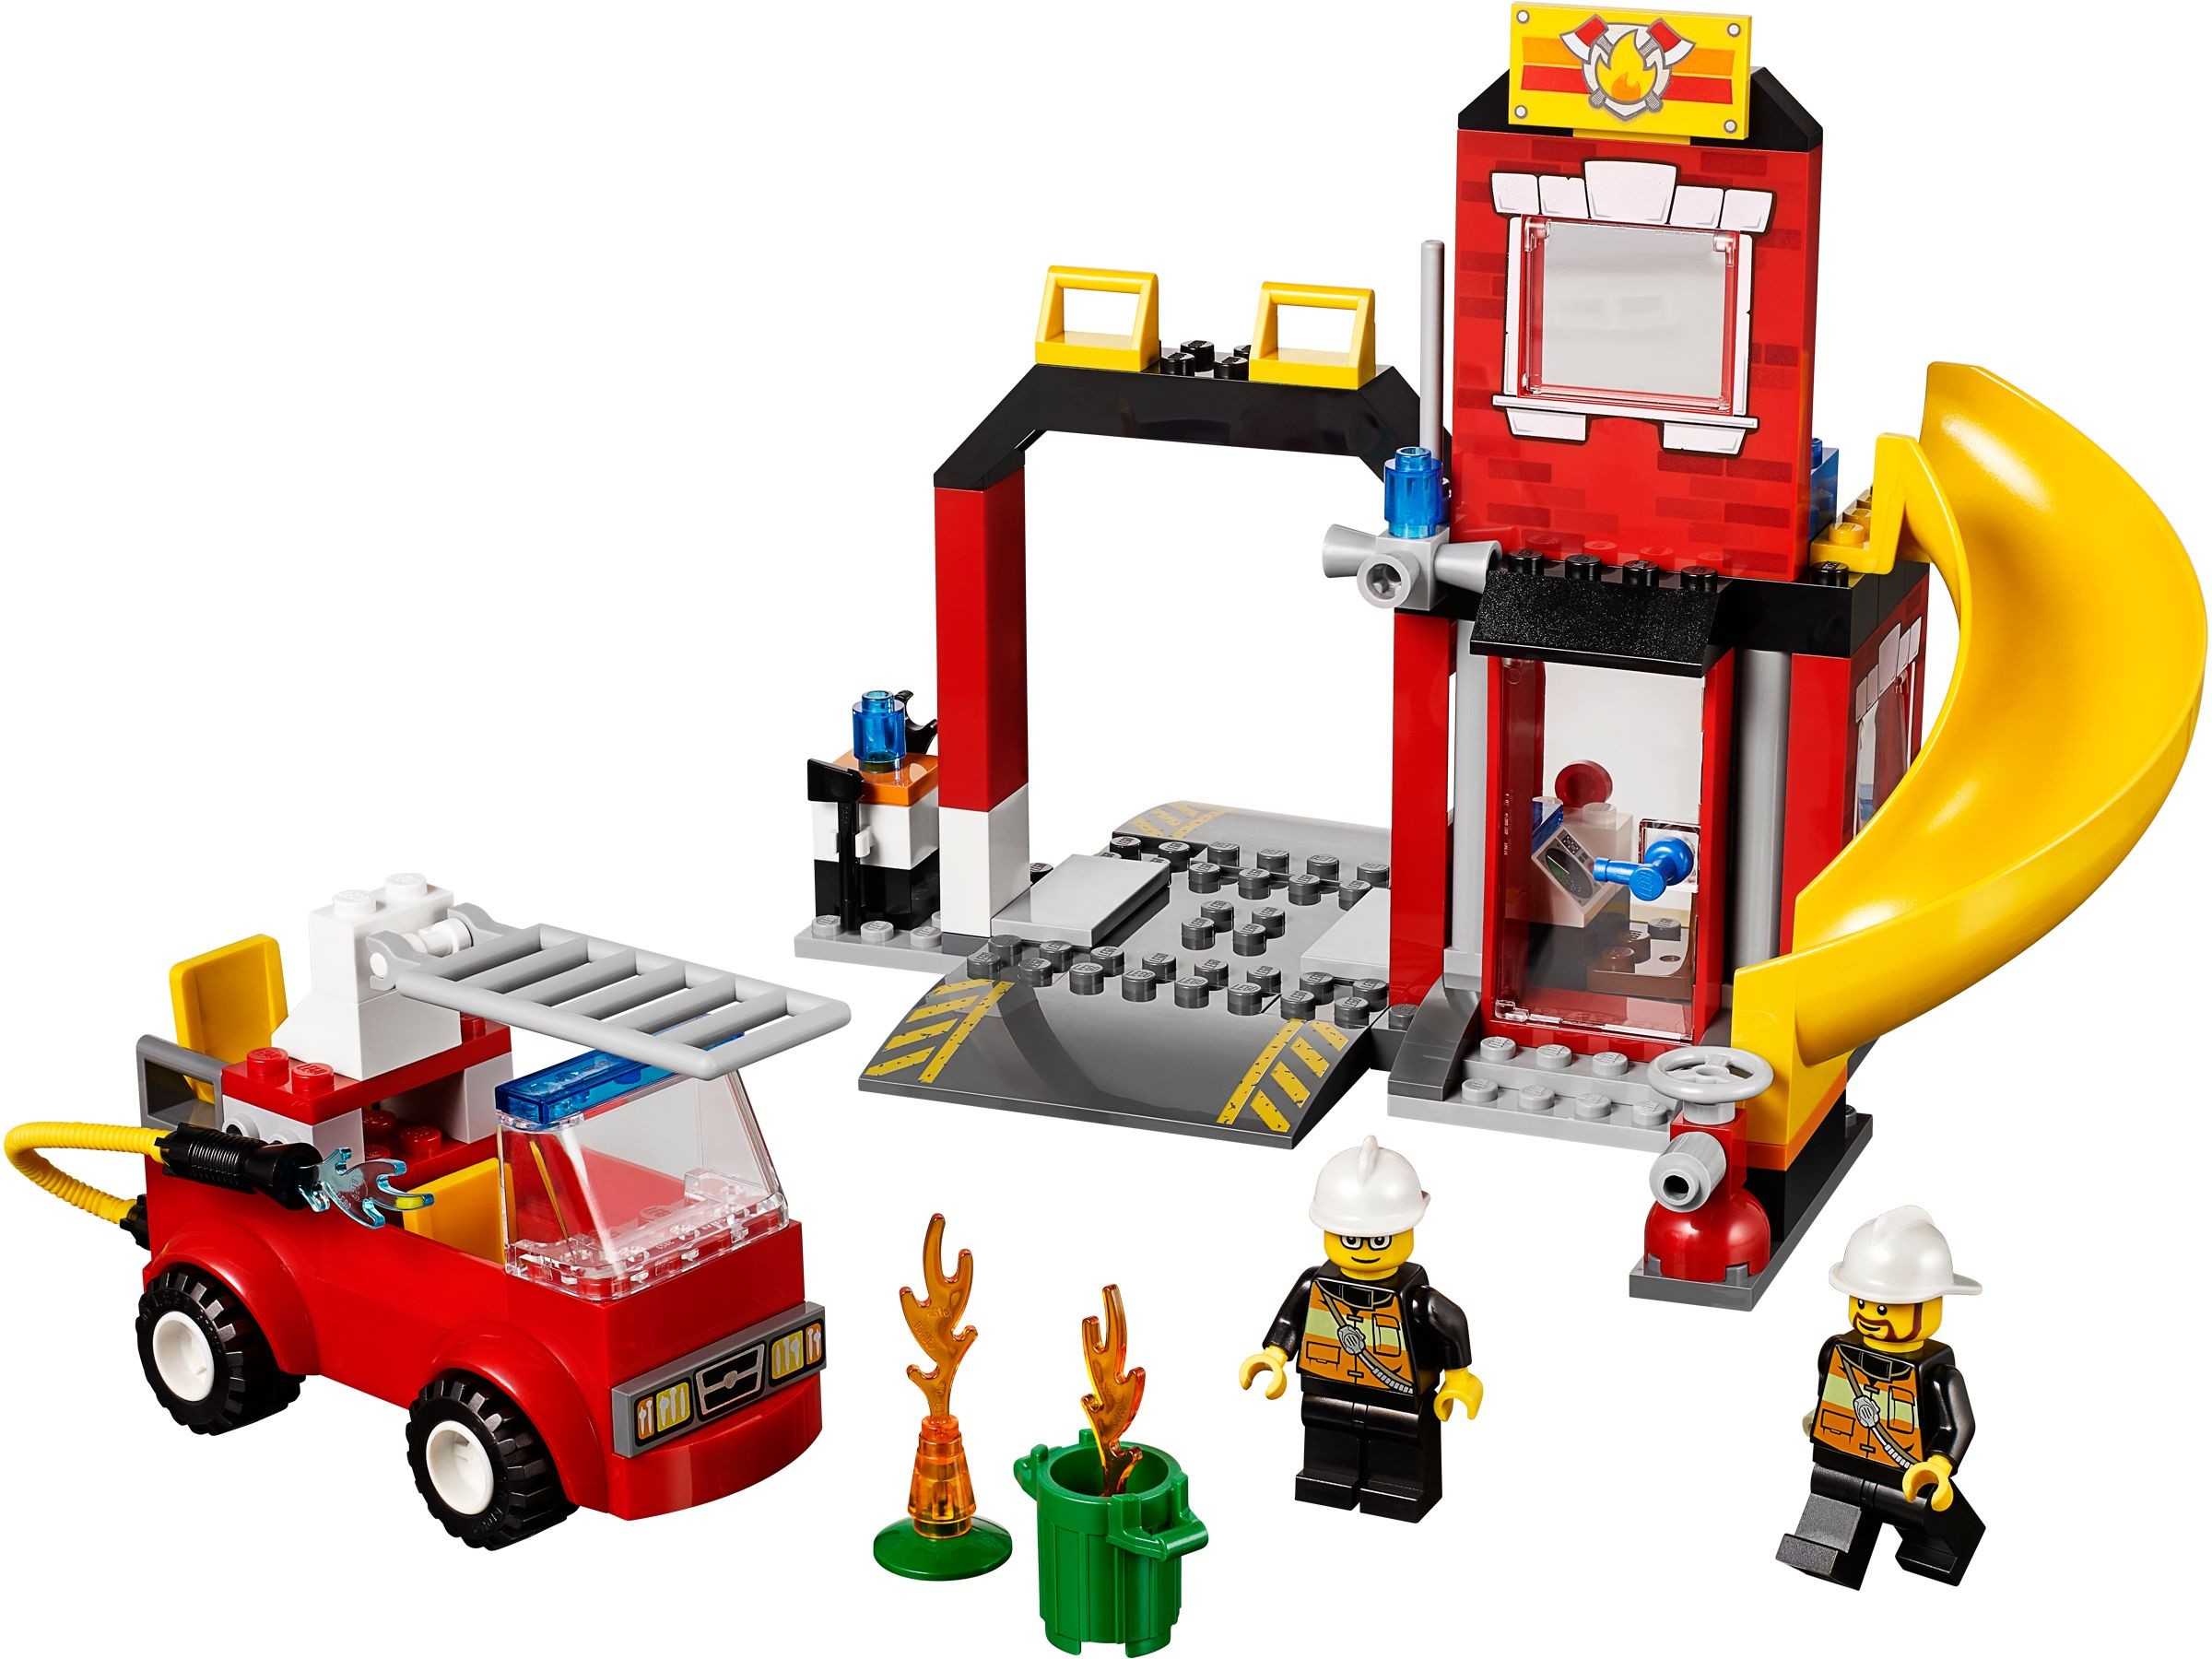 Politiebureau vroegrijp Lui Juniors | Brickset: LEGO set guide and database